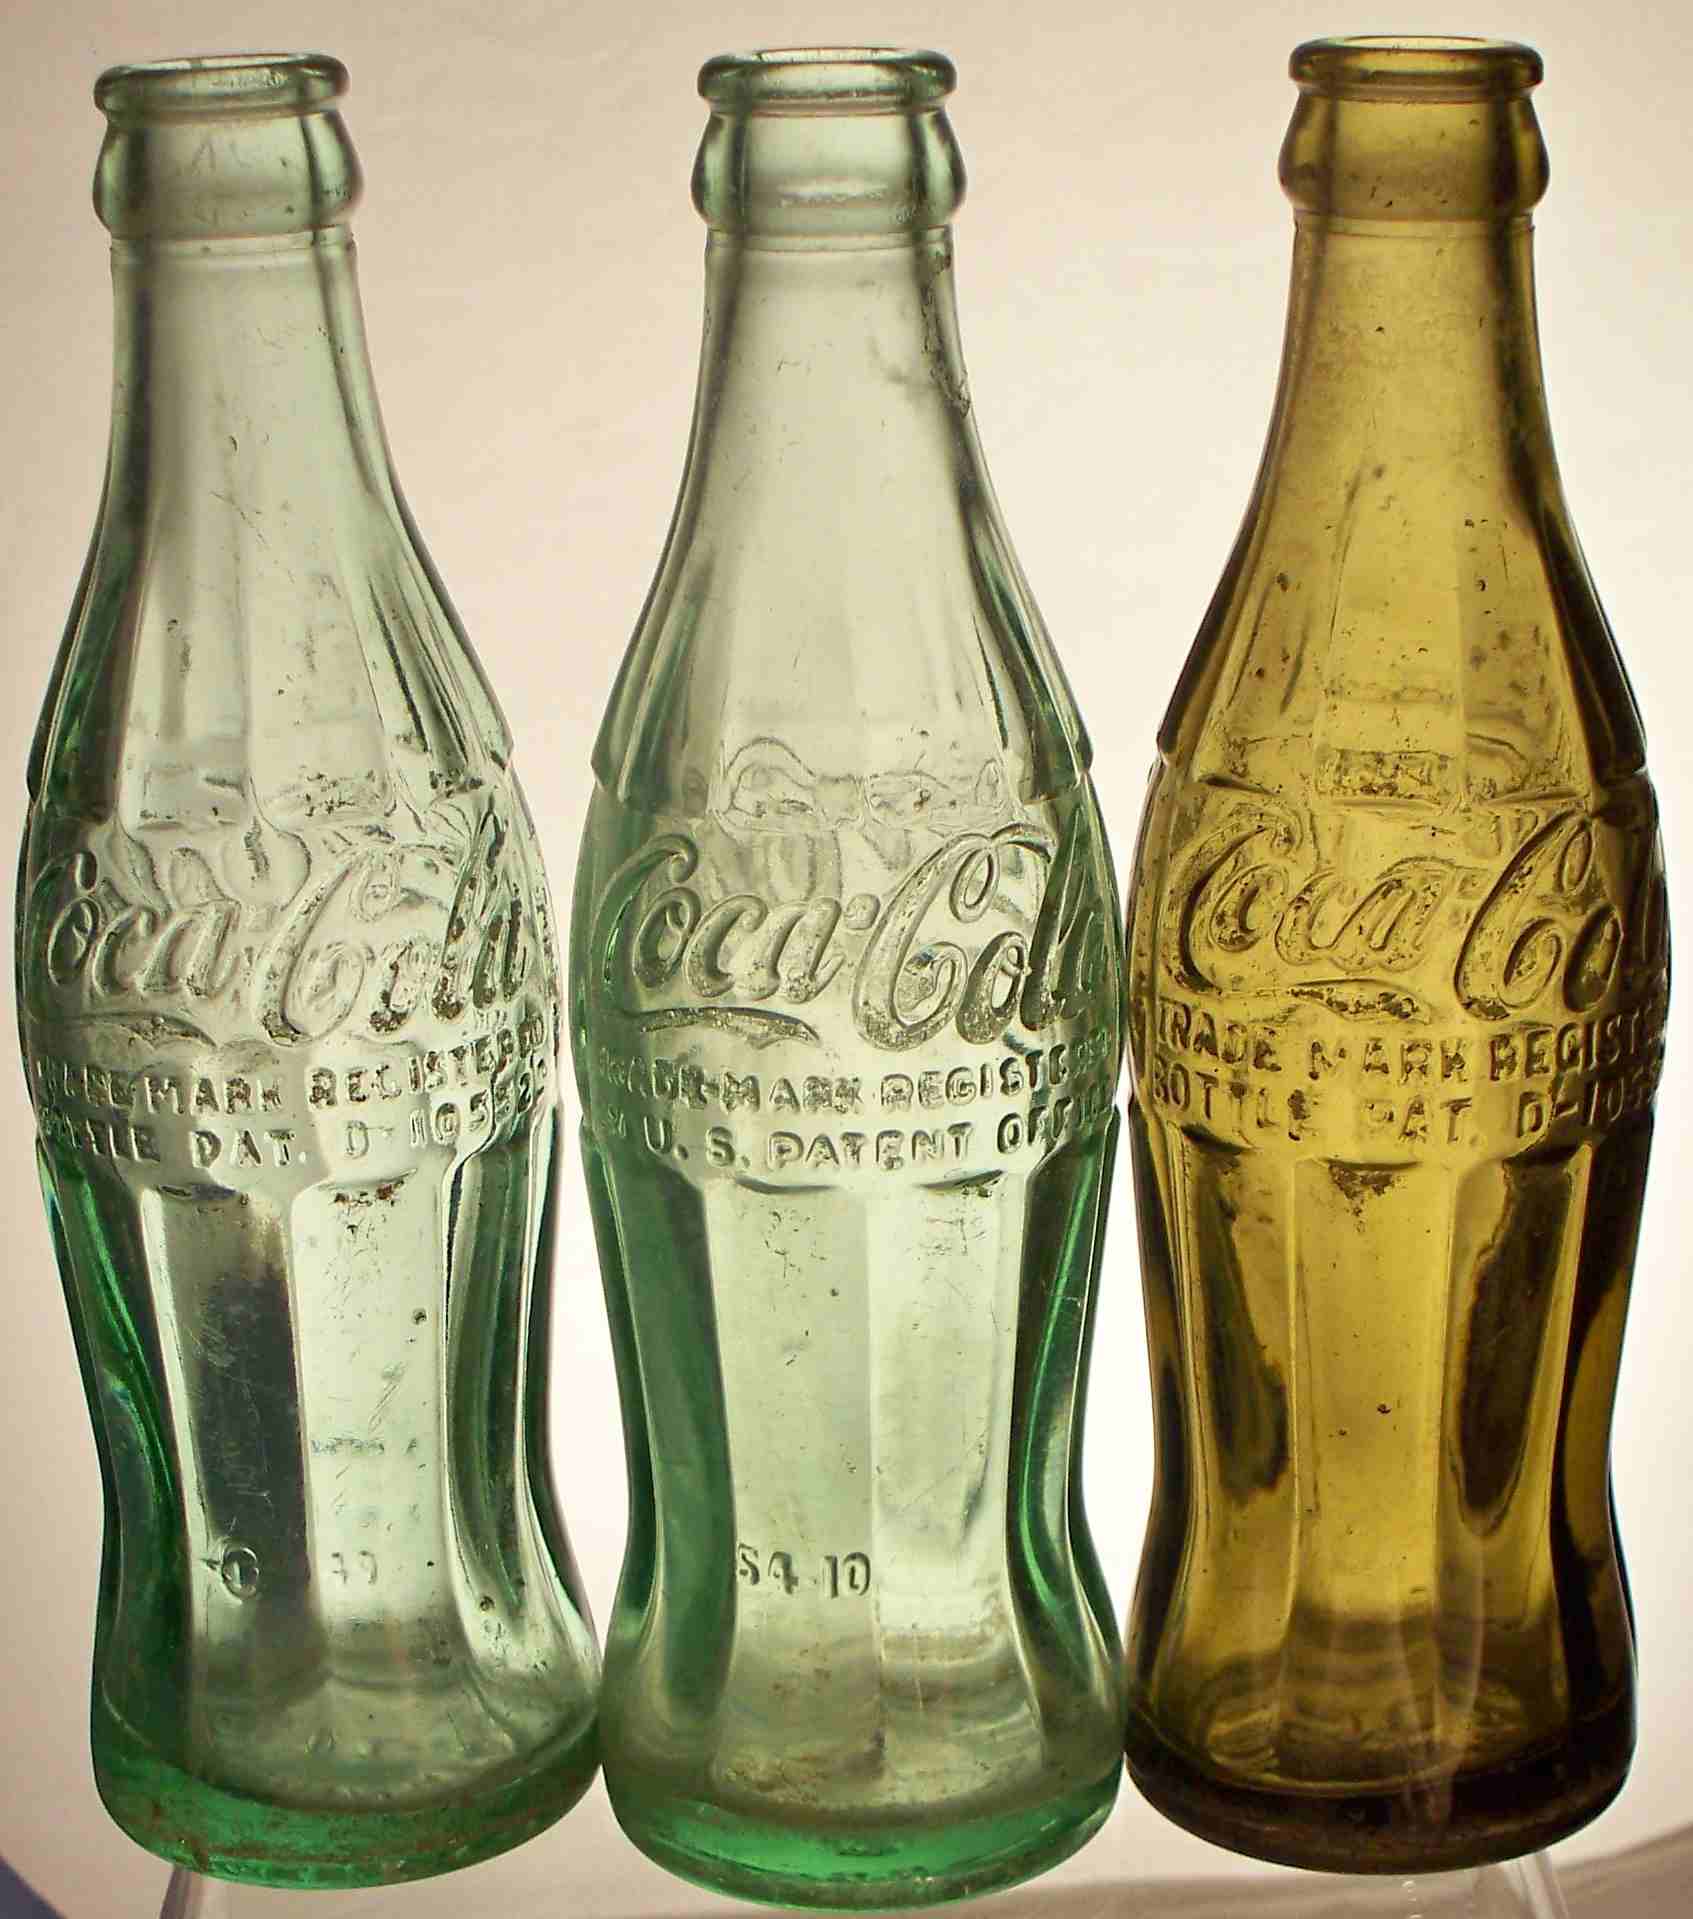 Antique bottle dating coke